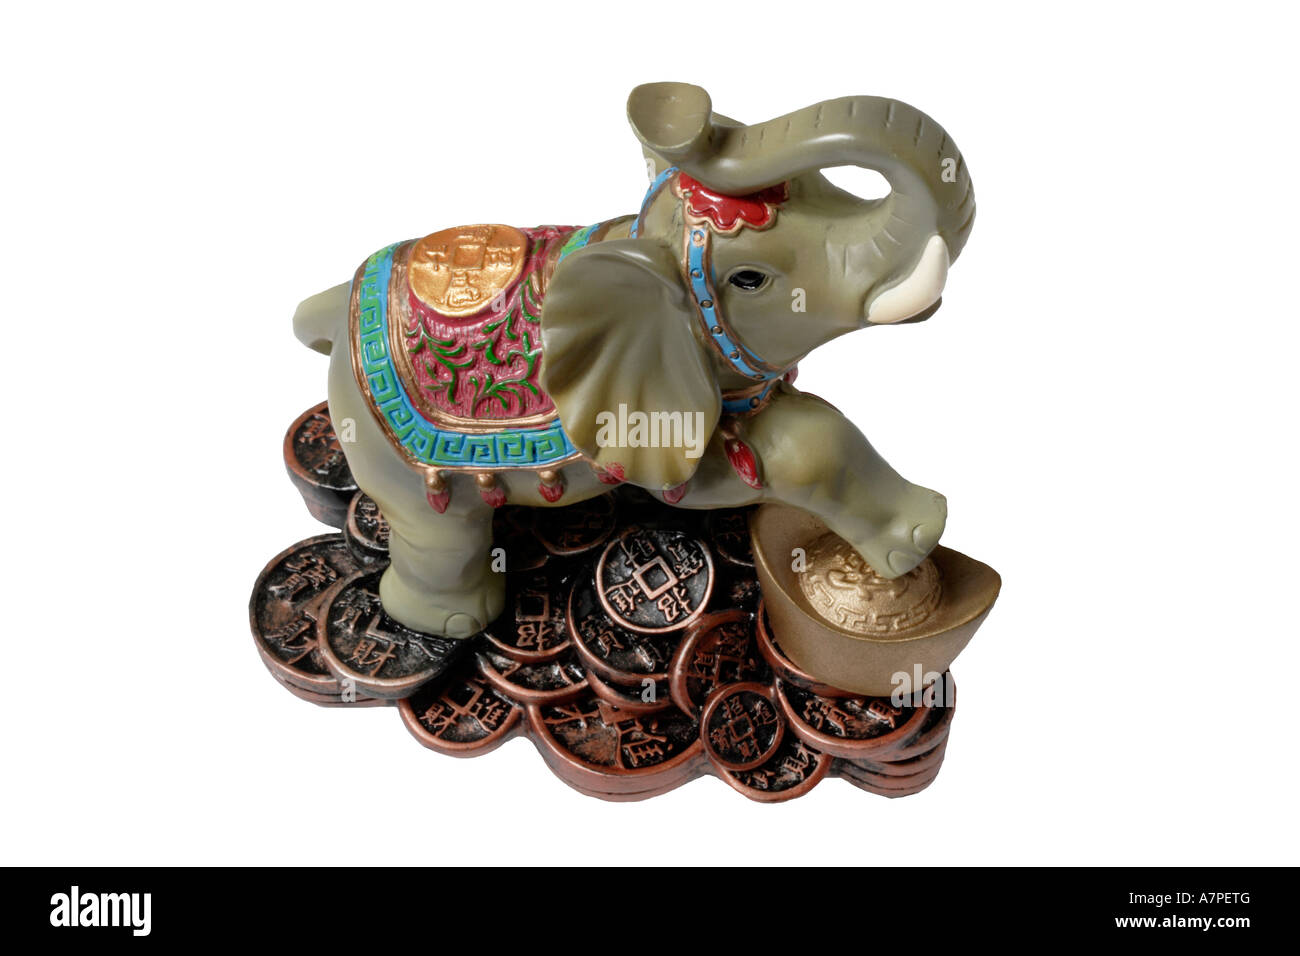 Elefante De La Buena Suerte Imagen de archivo - Imagen de objeto, fortuna:  61367955